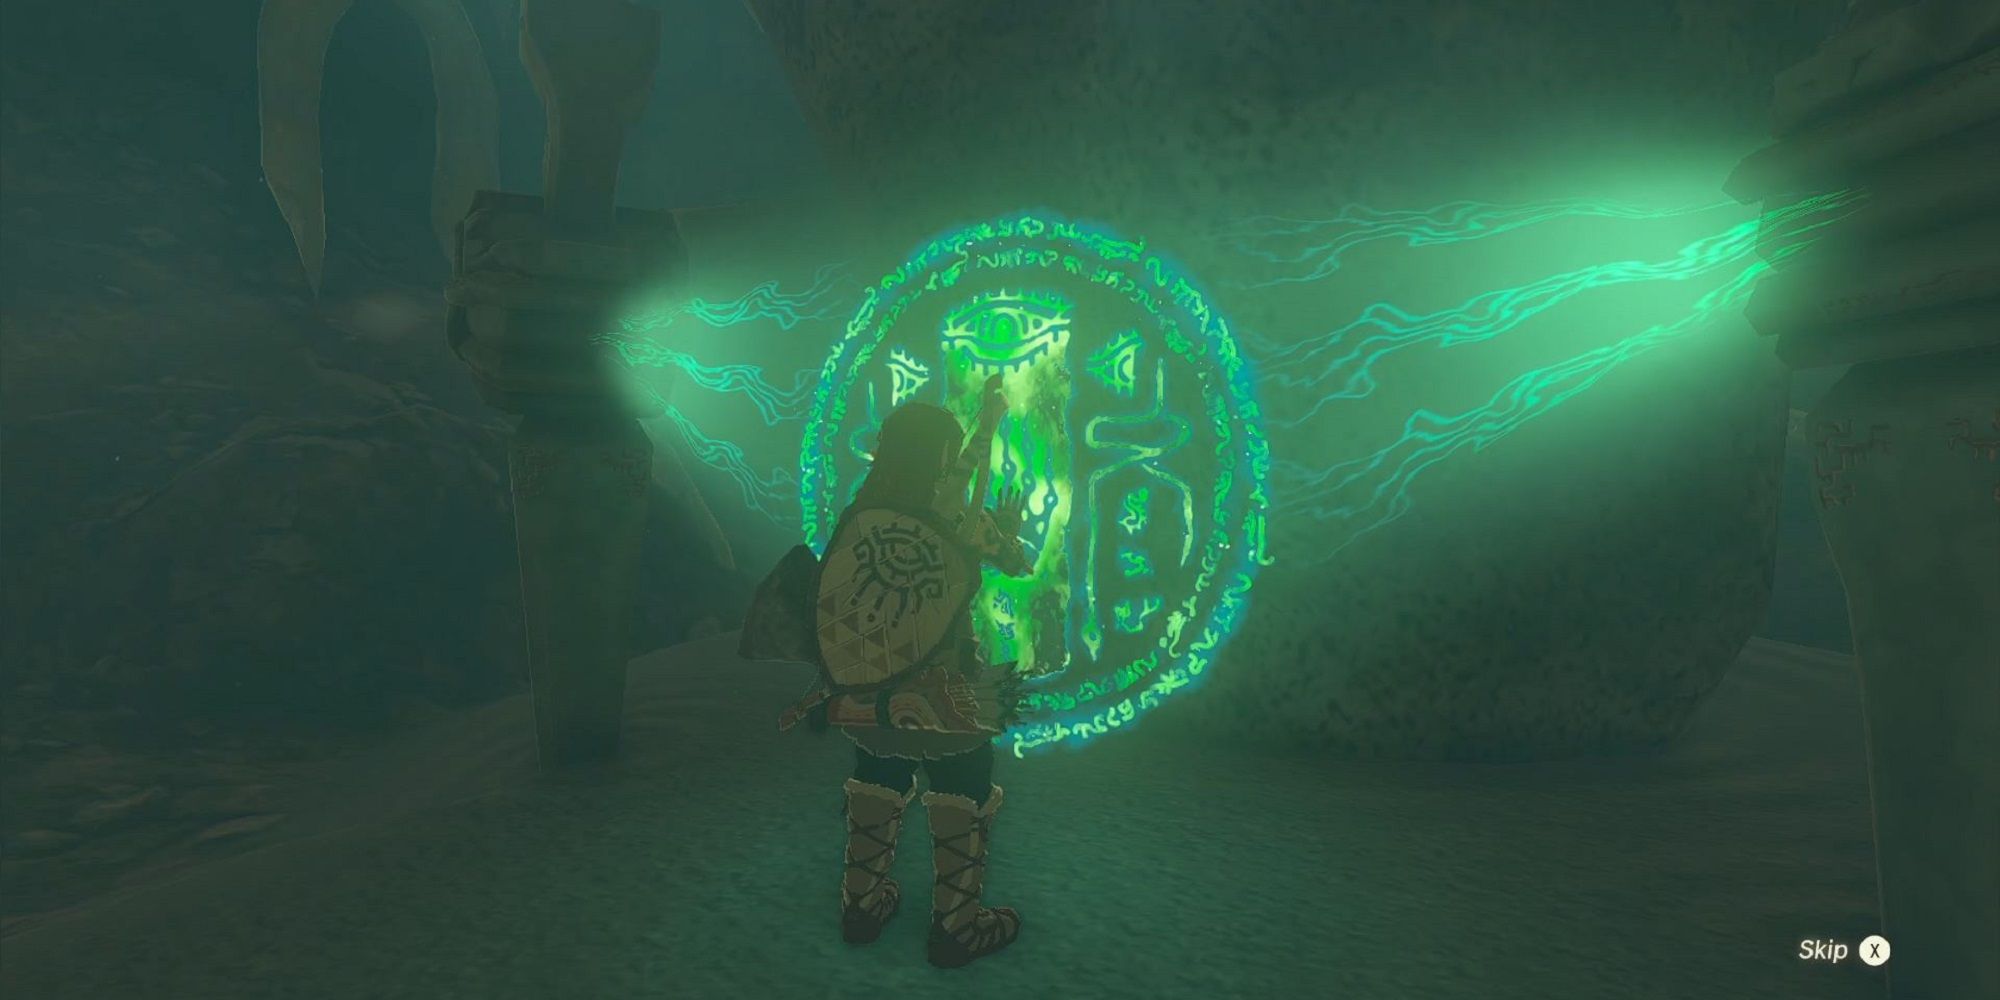 Zelda Breath of the Wild Shrine Locations, Breath of the Wild Dungeons